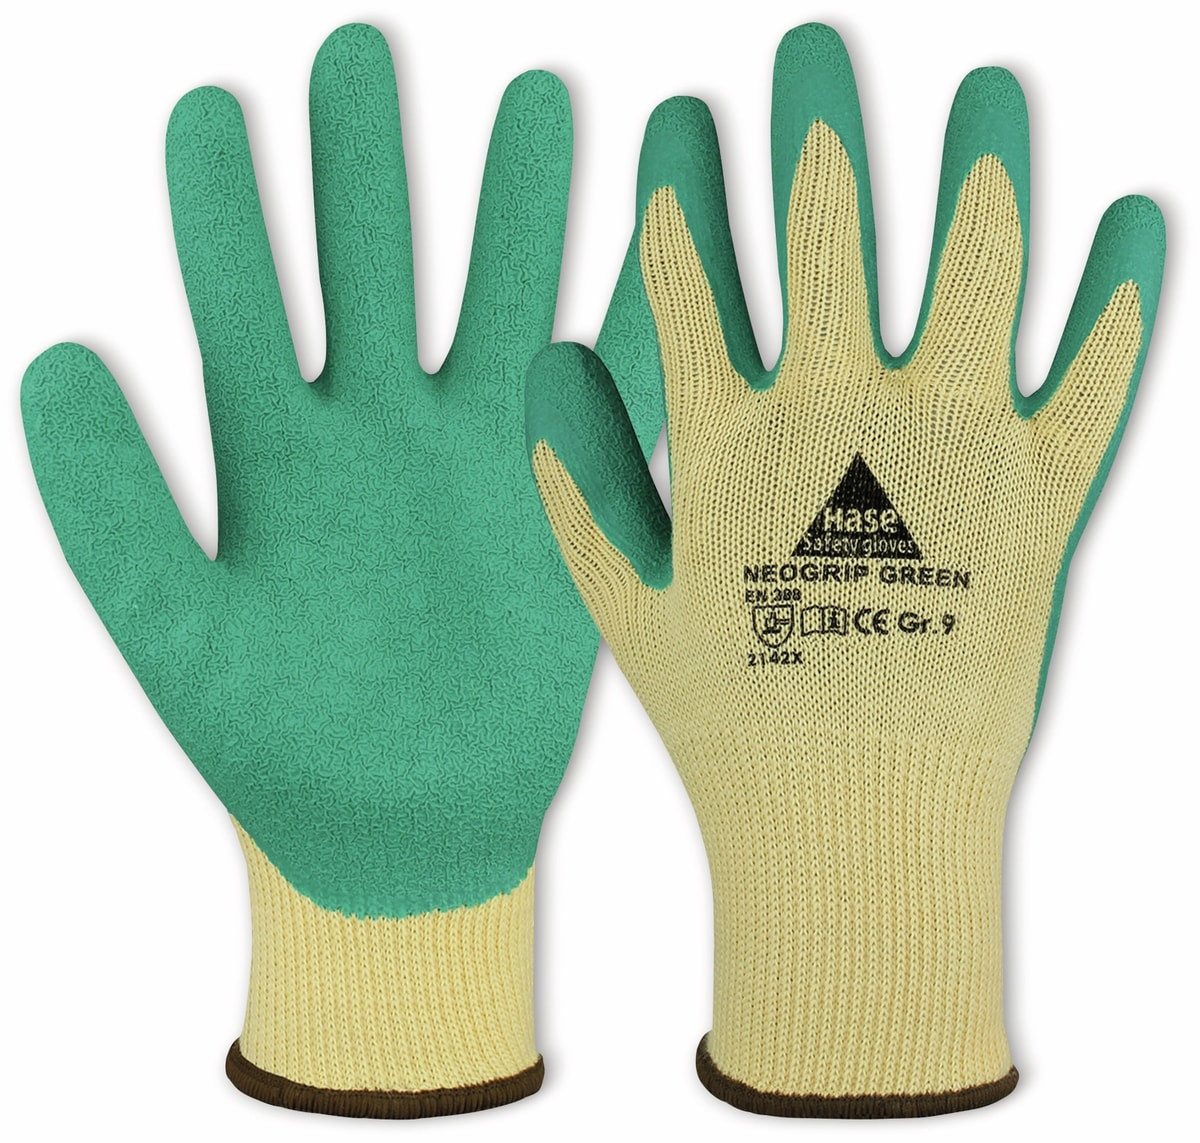 Hase Safety Gloves Arbeitshandschuhe HASE SAFETY GLOVES Latex-Arbeitshandschuh, Neogrip von Hase Safety Gloves